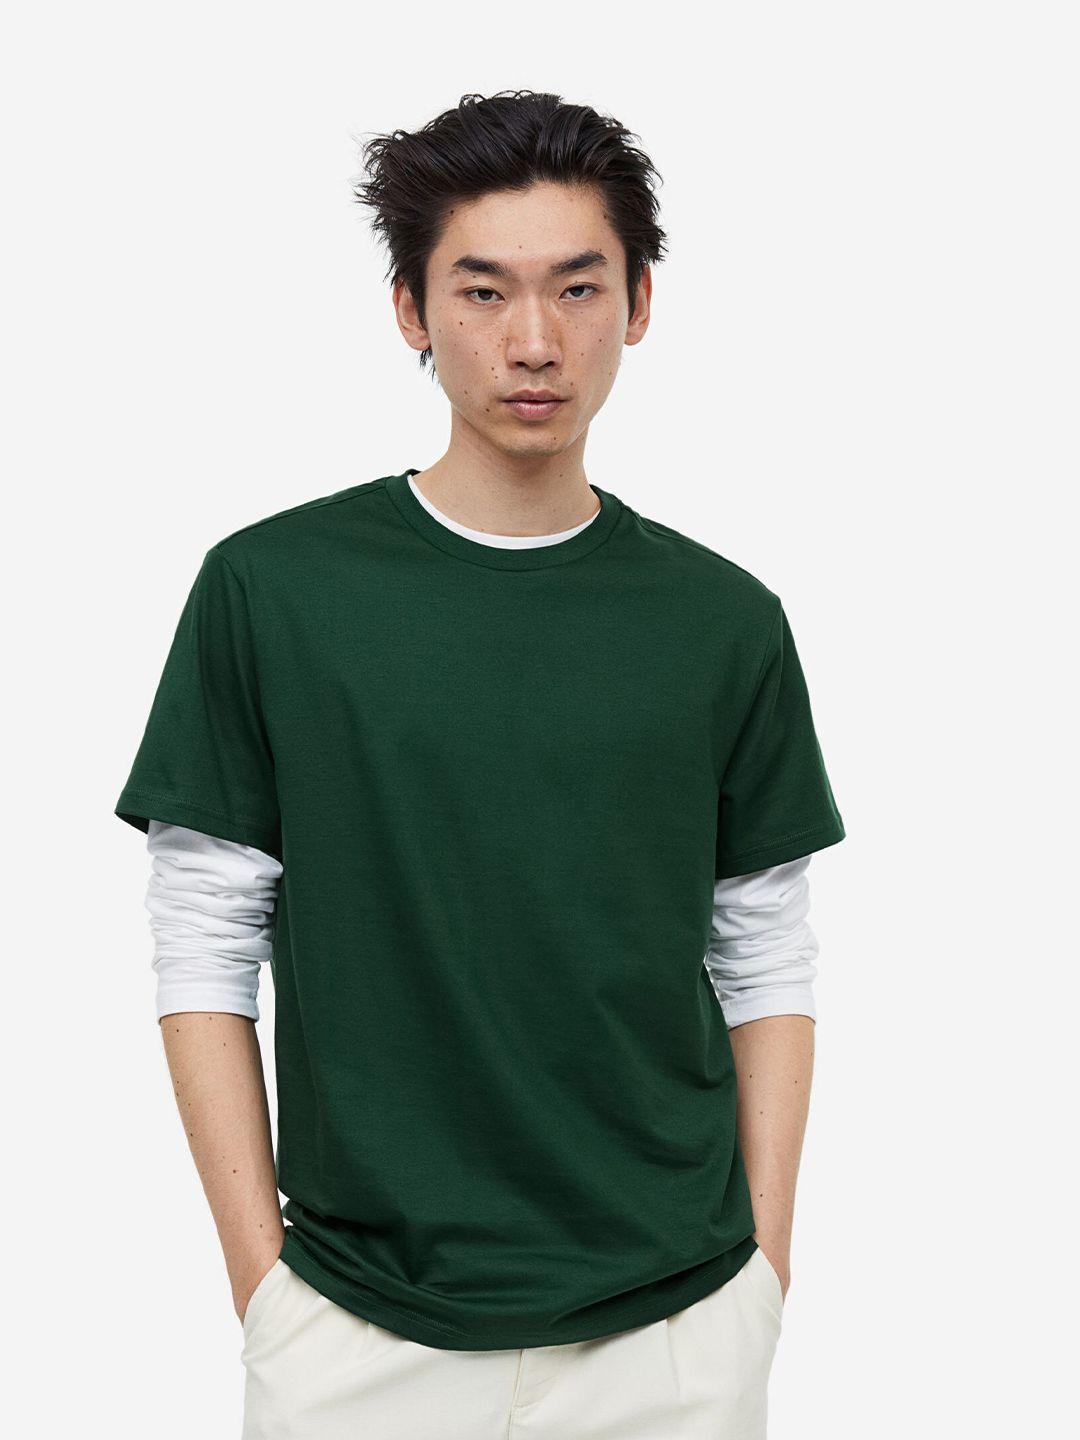 h&m-pure-cotton-regular-fit-round-neck-t-shirt